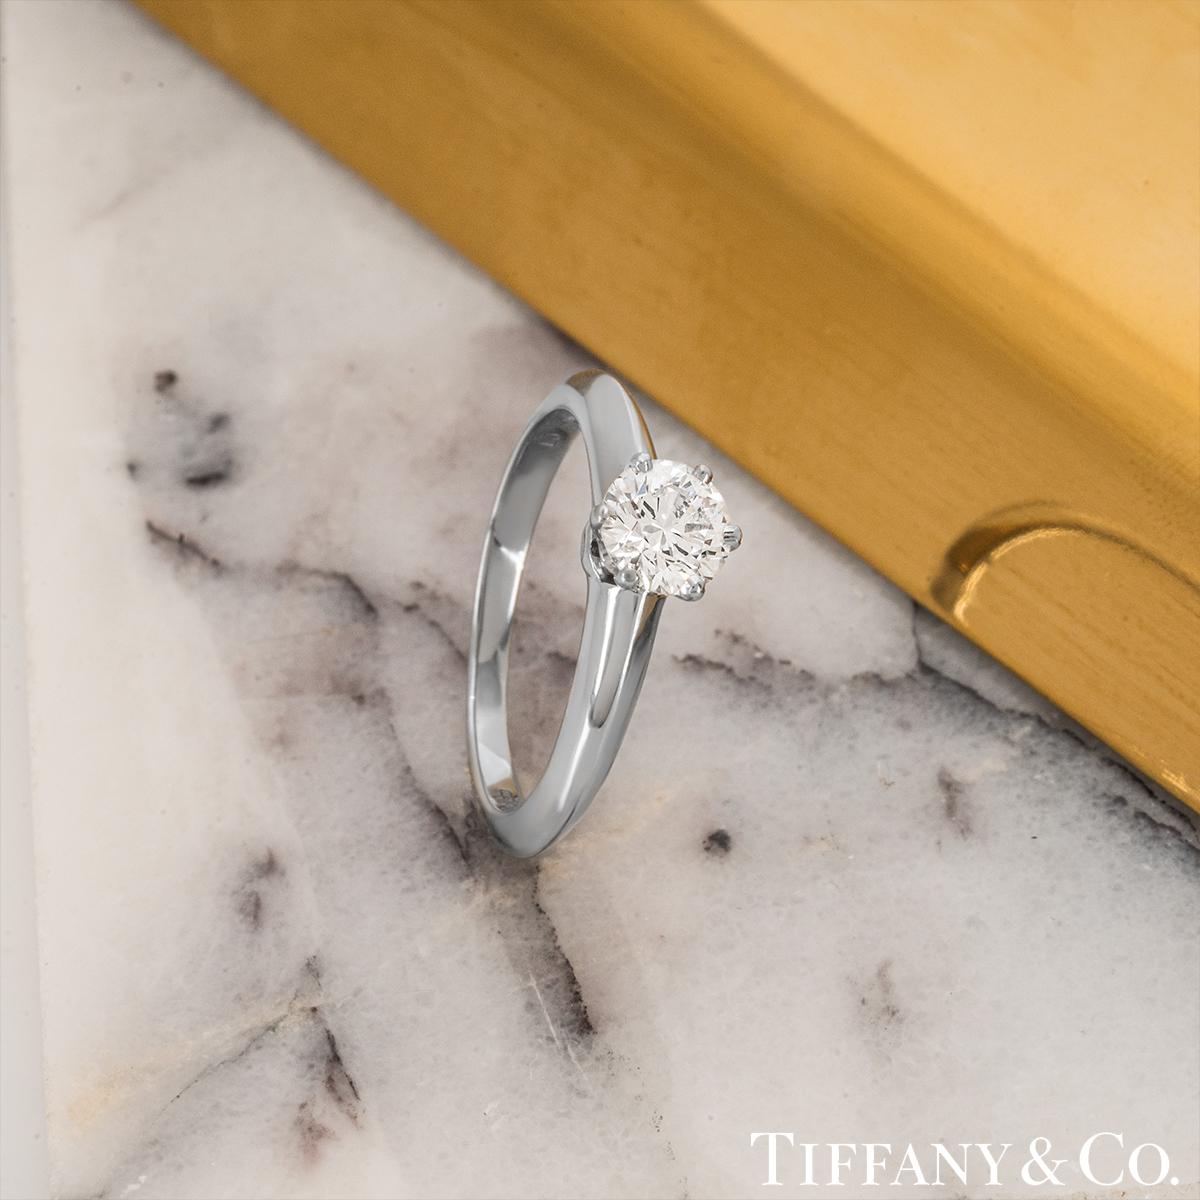 Tiffany & Co. Platinum Diamond Setting Ring 0.57ct D/VVS2 1